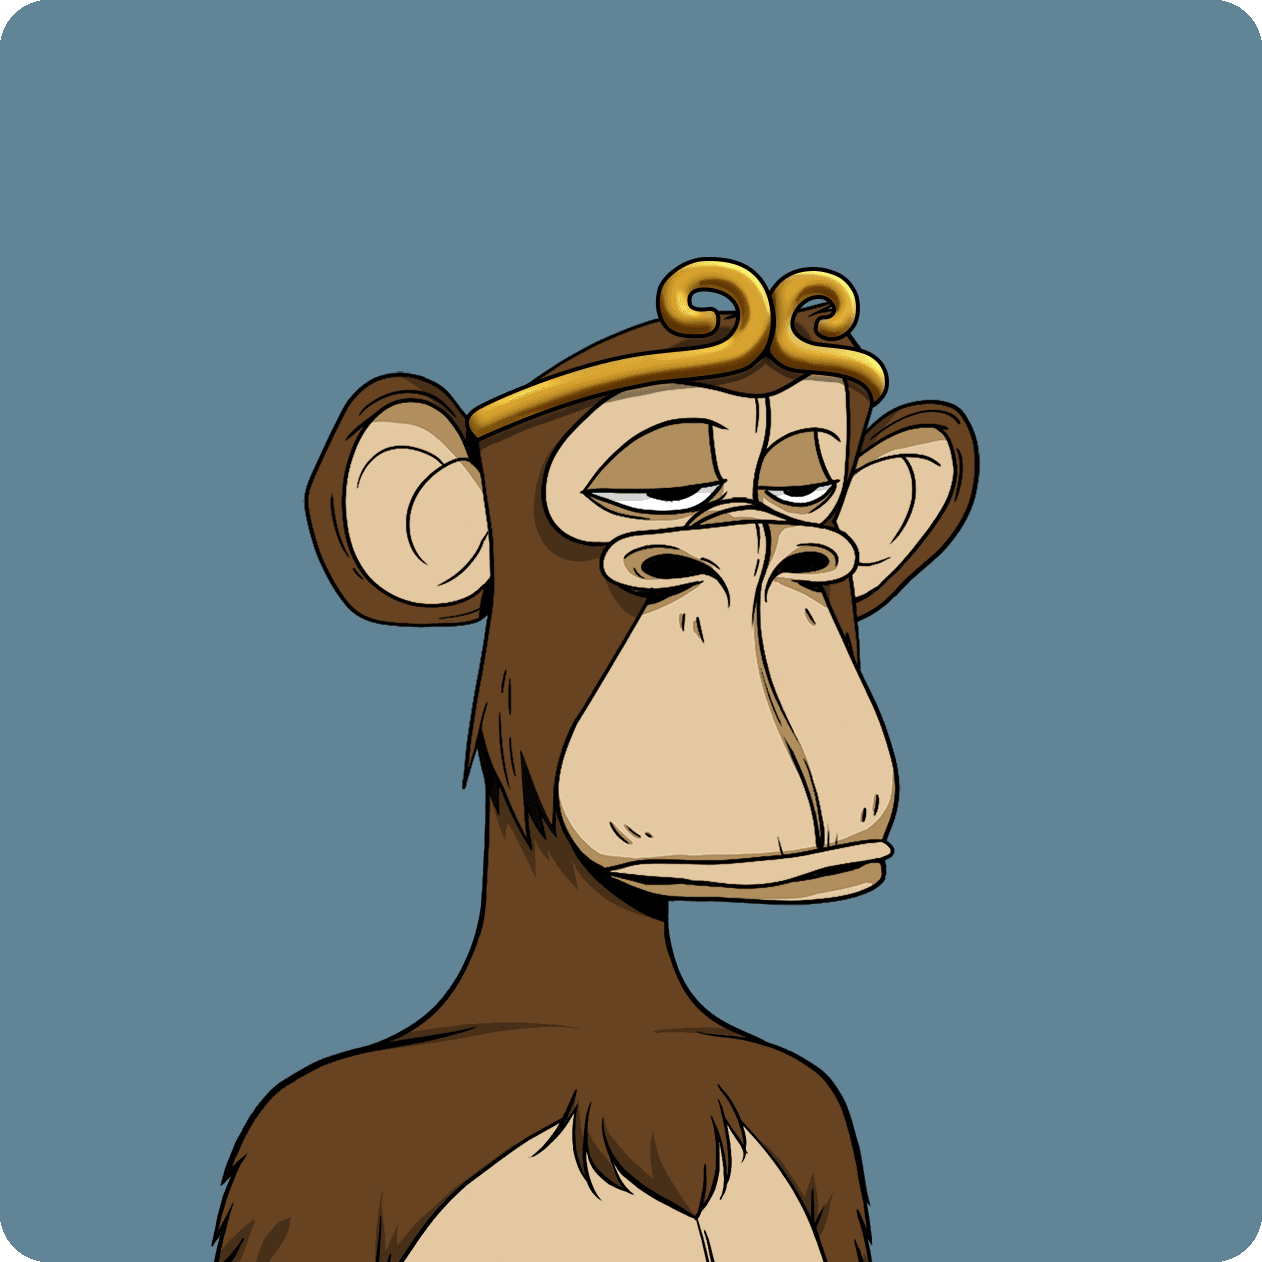 Honorary Bored Ape #13